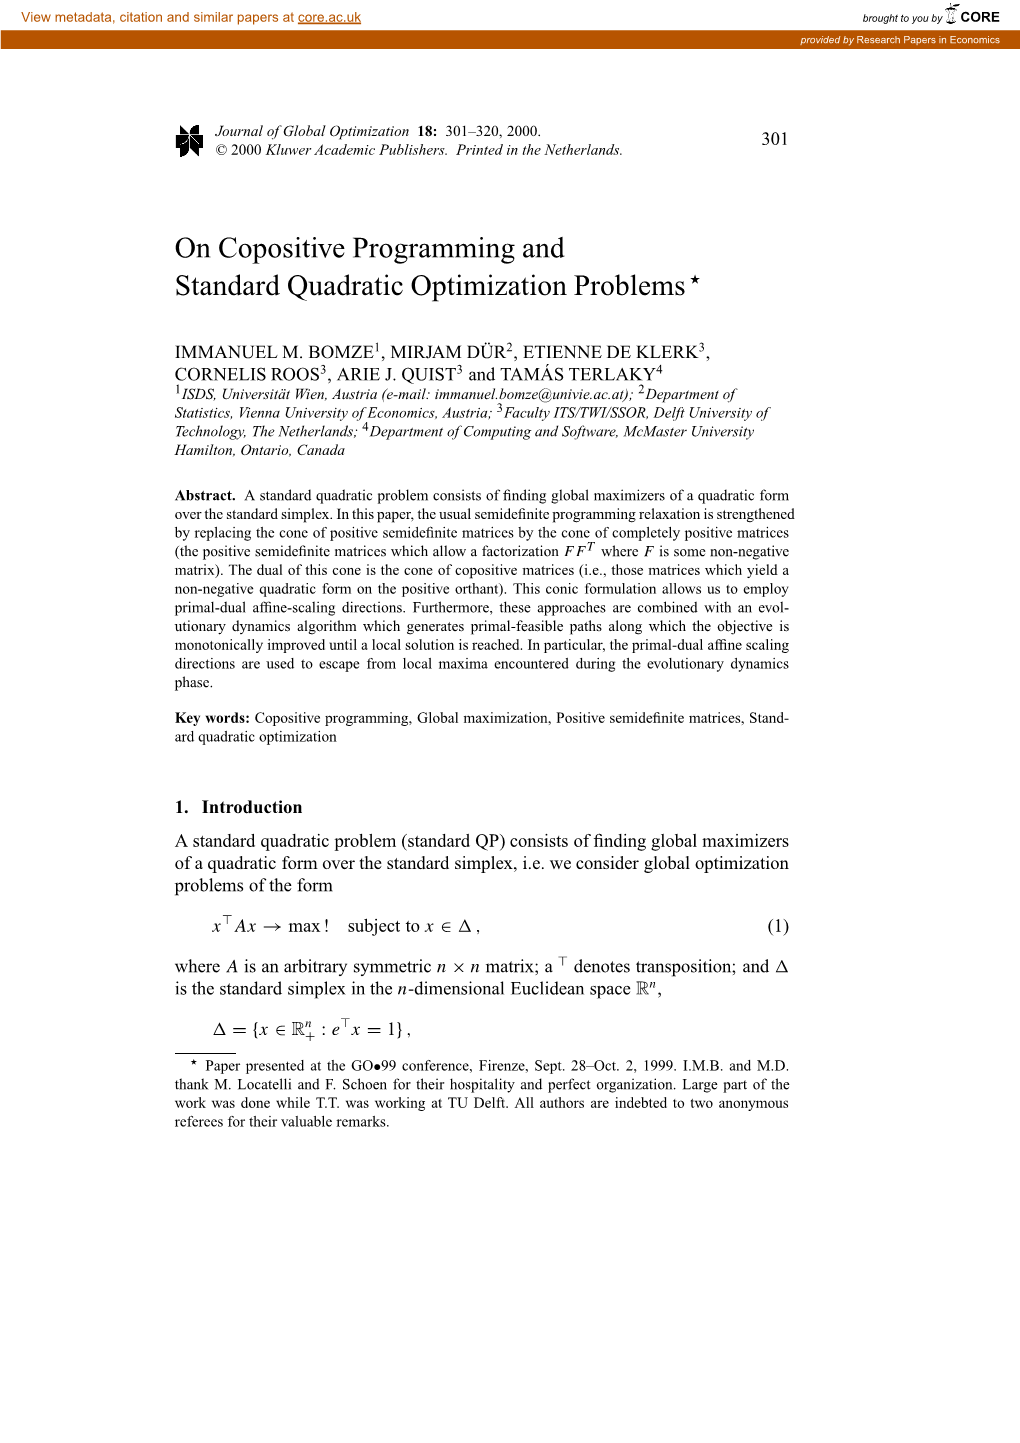 On Copositive Programming and Standard Quadratic Optimization Problems ?